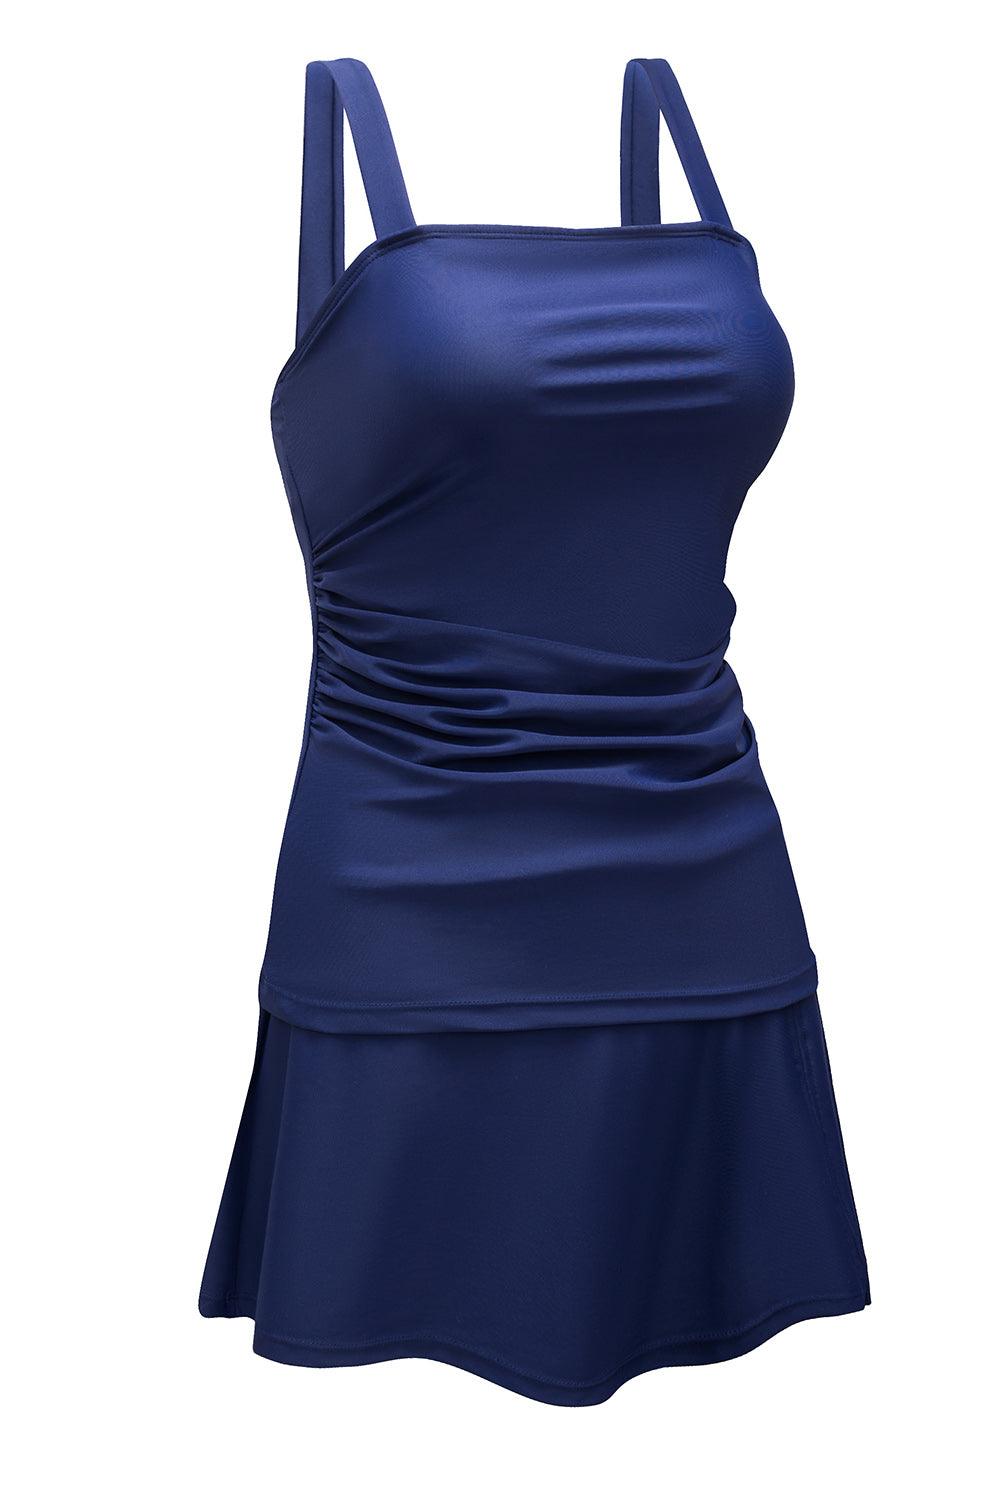 - Blue Solid Square Neck Tankini Swimsuit - womens tankini at TFC&H Co.